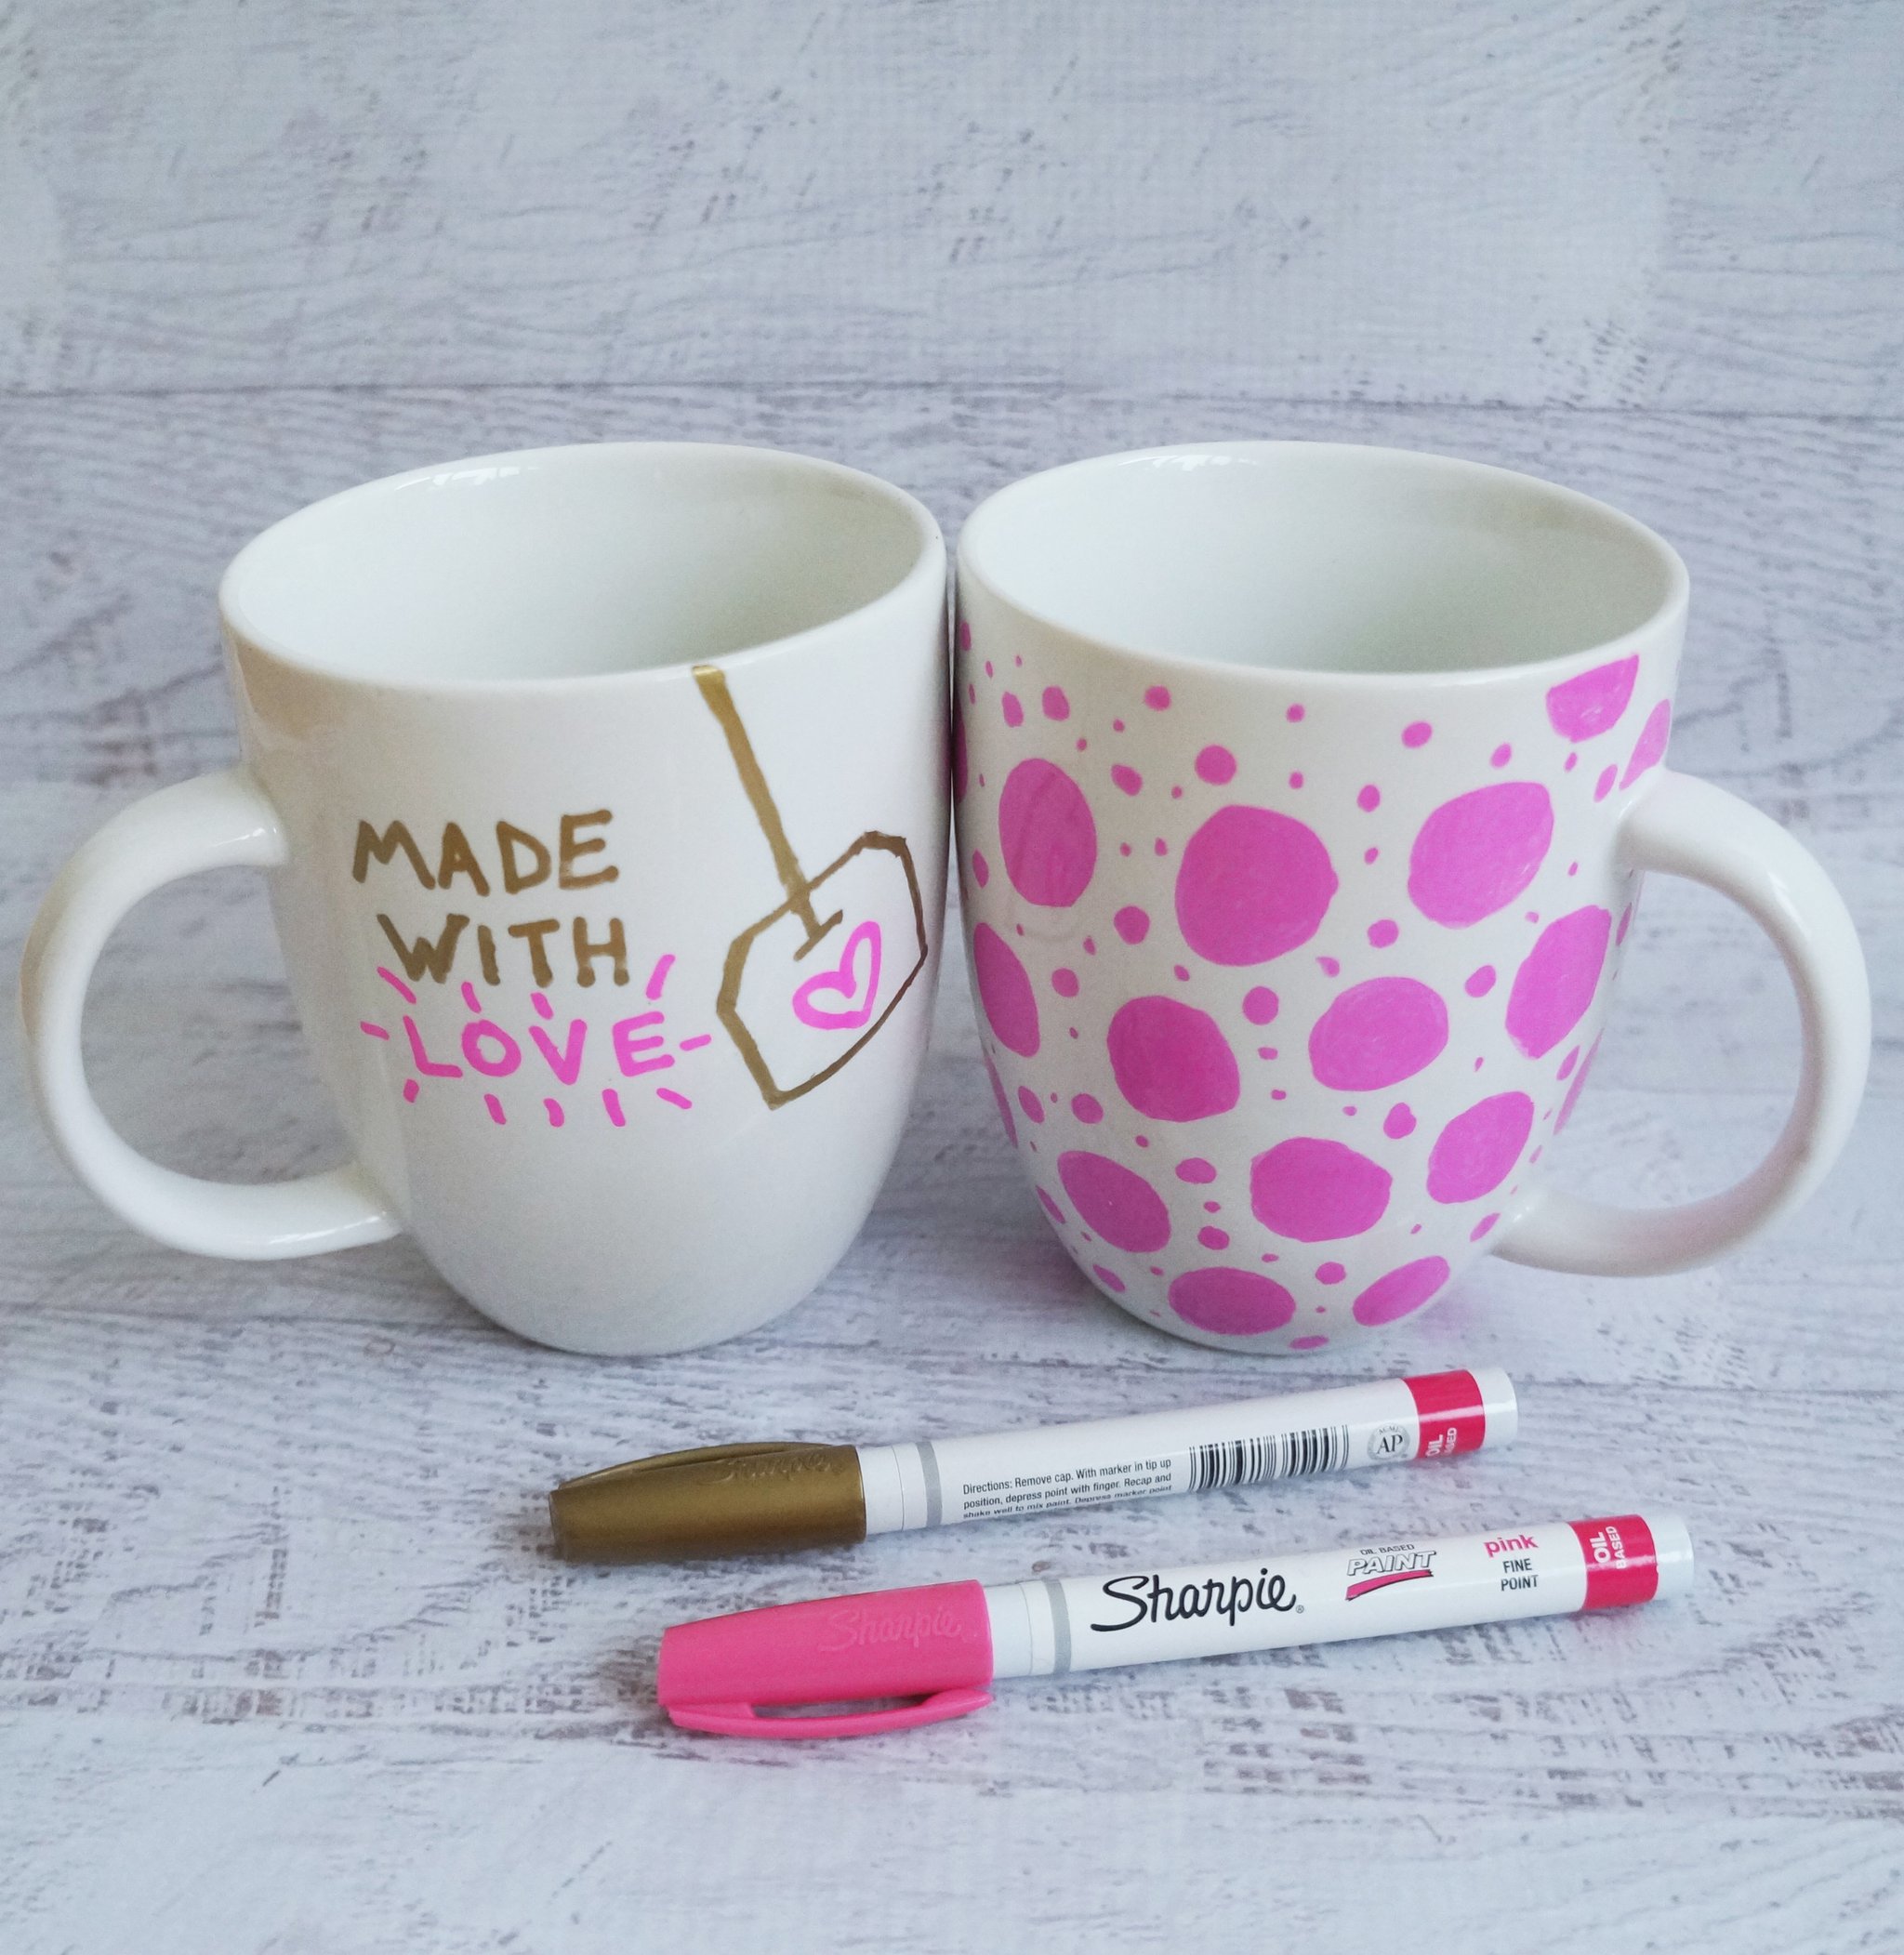 DIY glam sharpie mugs in gold and pink (via www.popsugar.com)